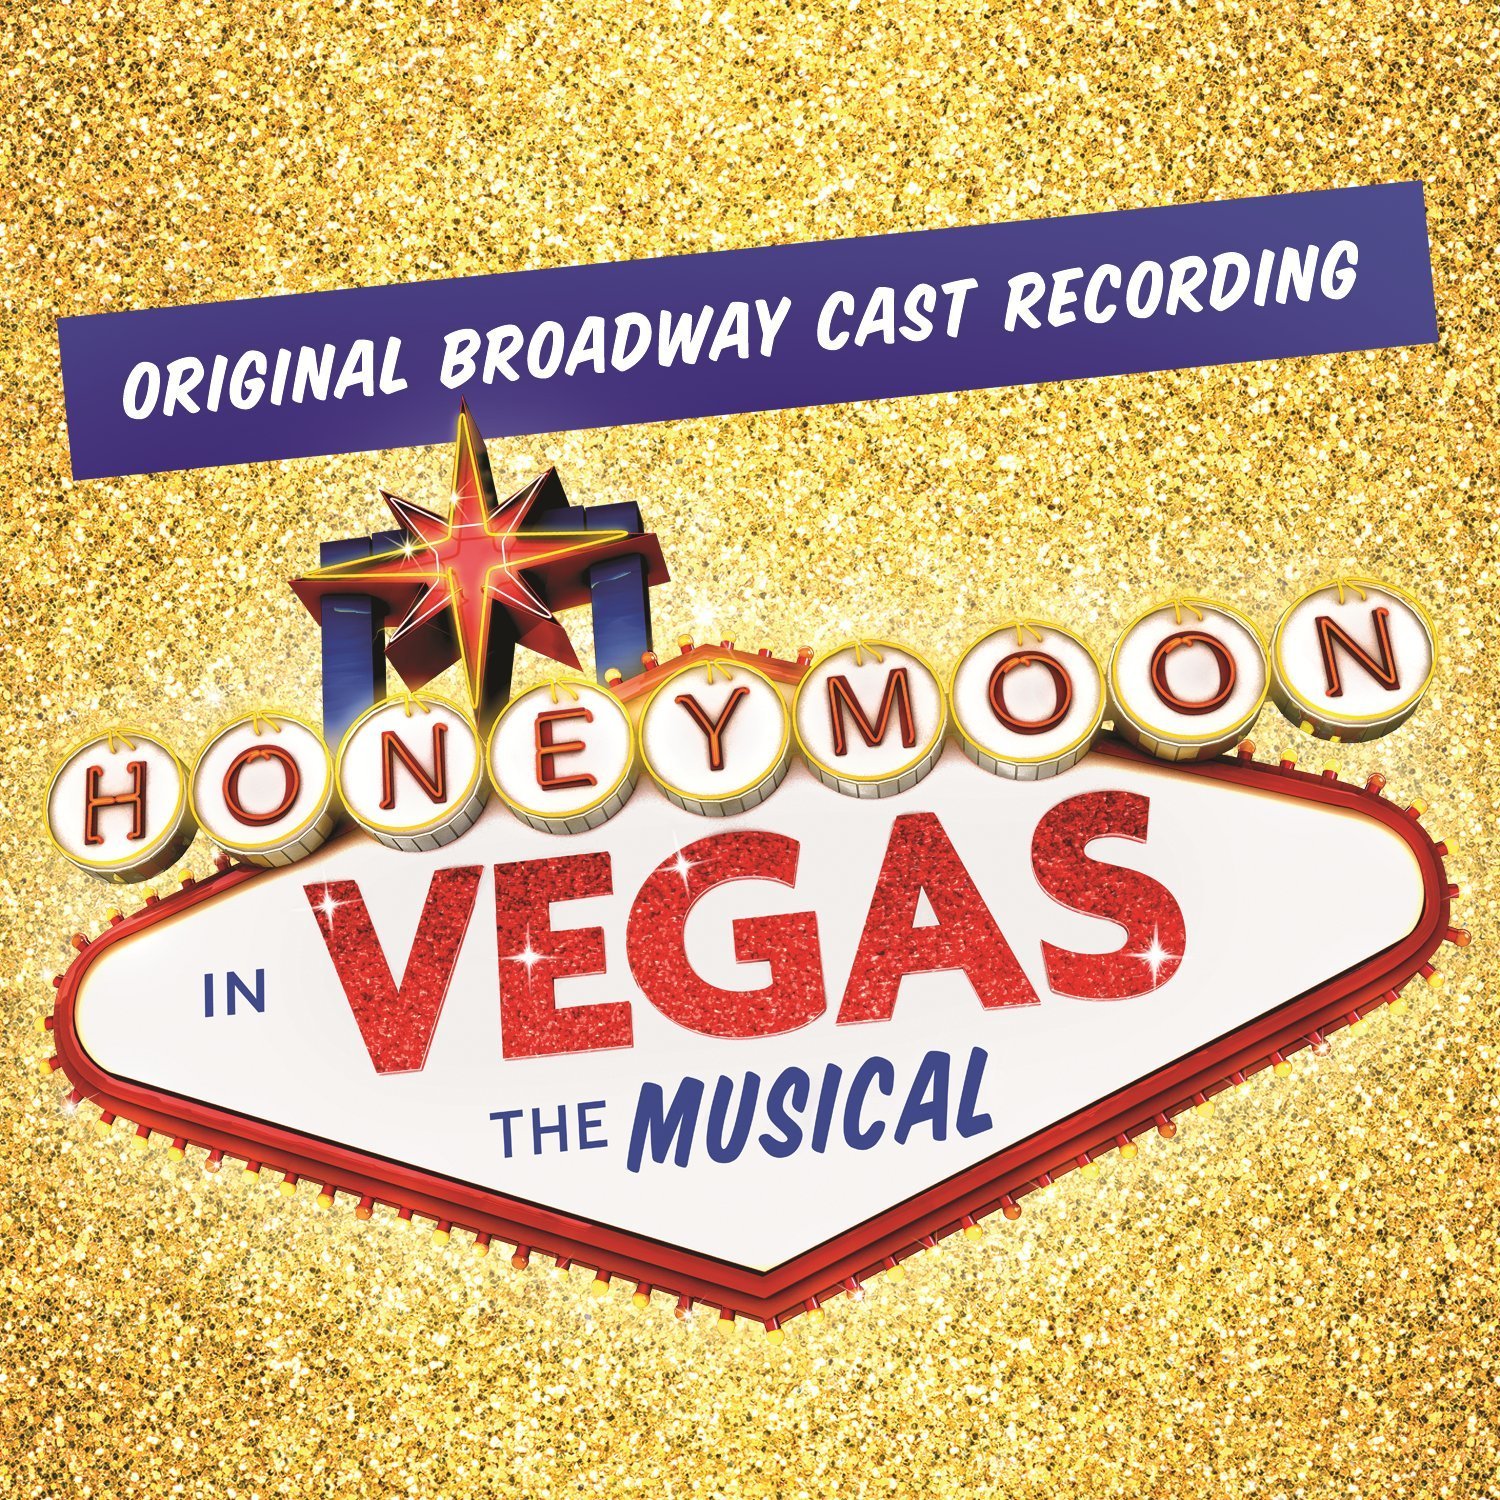 Honeymoon in Vegas: The Musical - Original Broadway Cast Recording Album